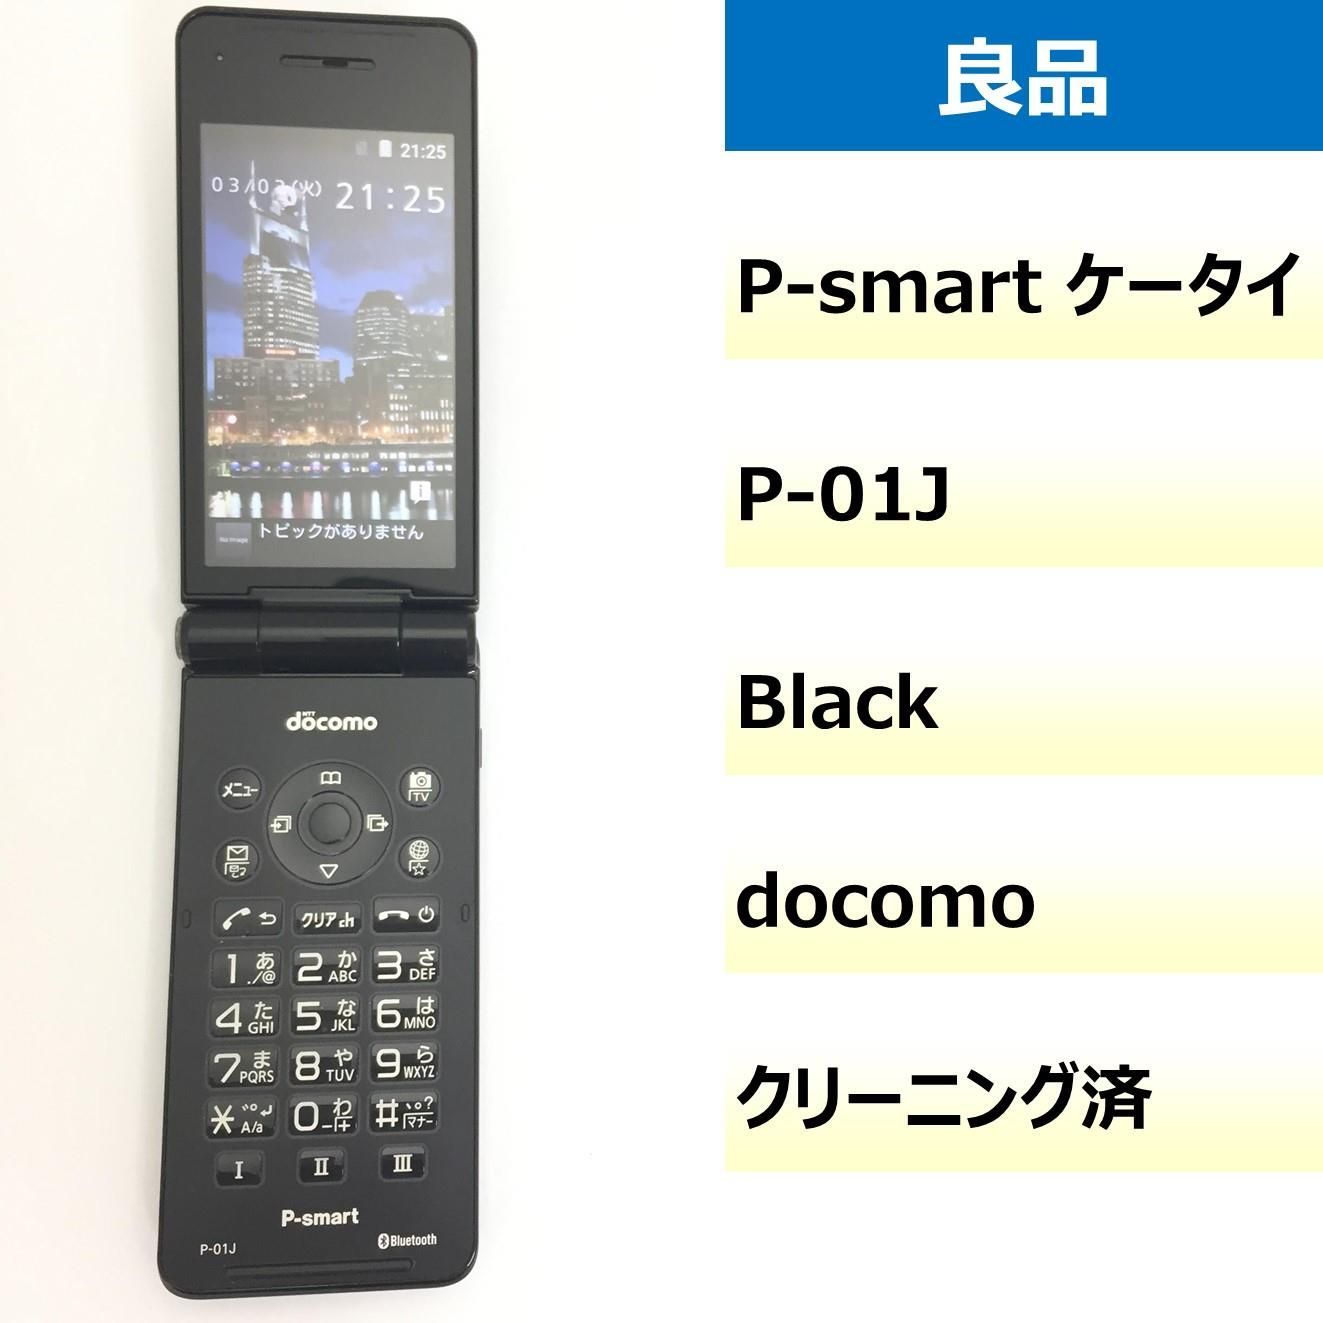 【B】P-01J/P-smart ケータイ/358781076872285